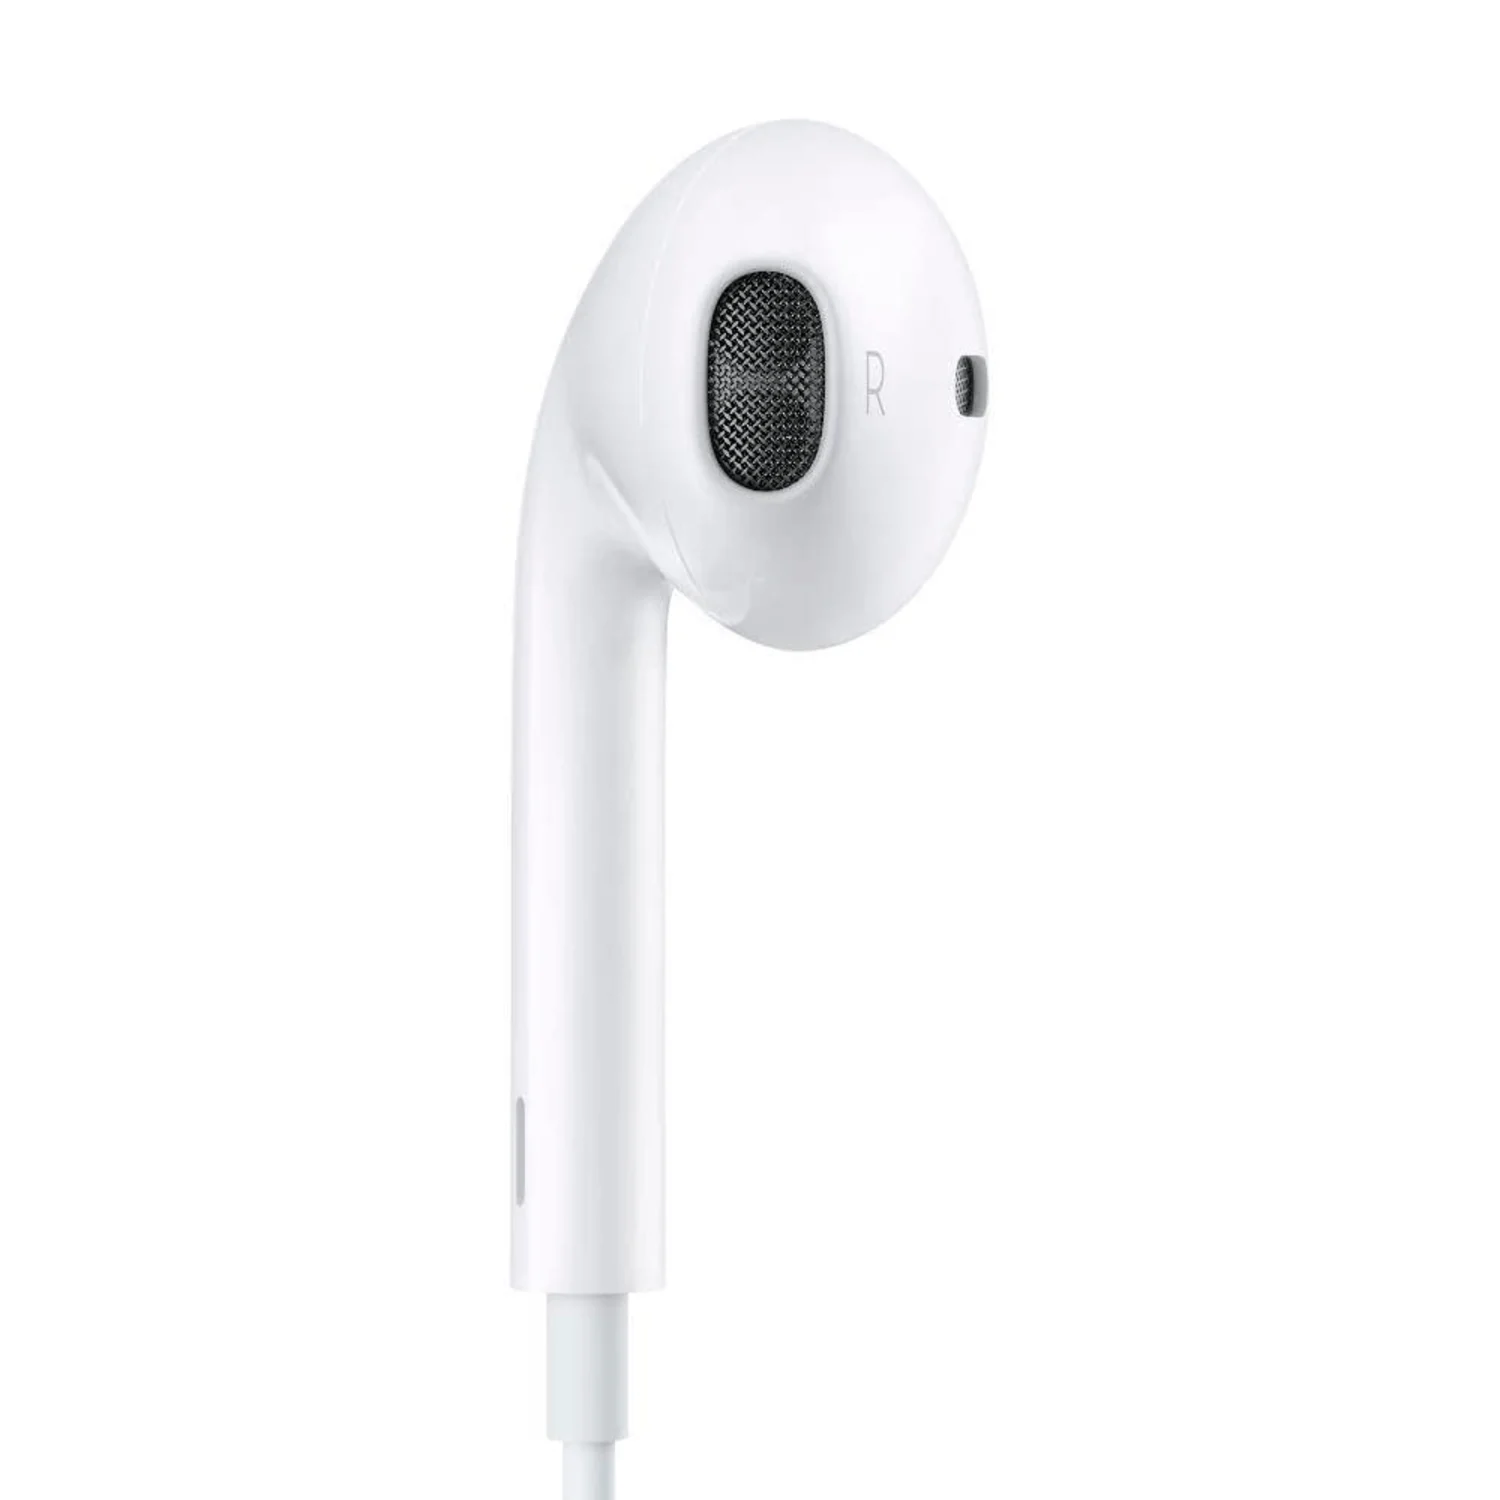 Fone de ouvido Apple Earpods MMTN2AM/A Original - Branco